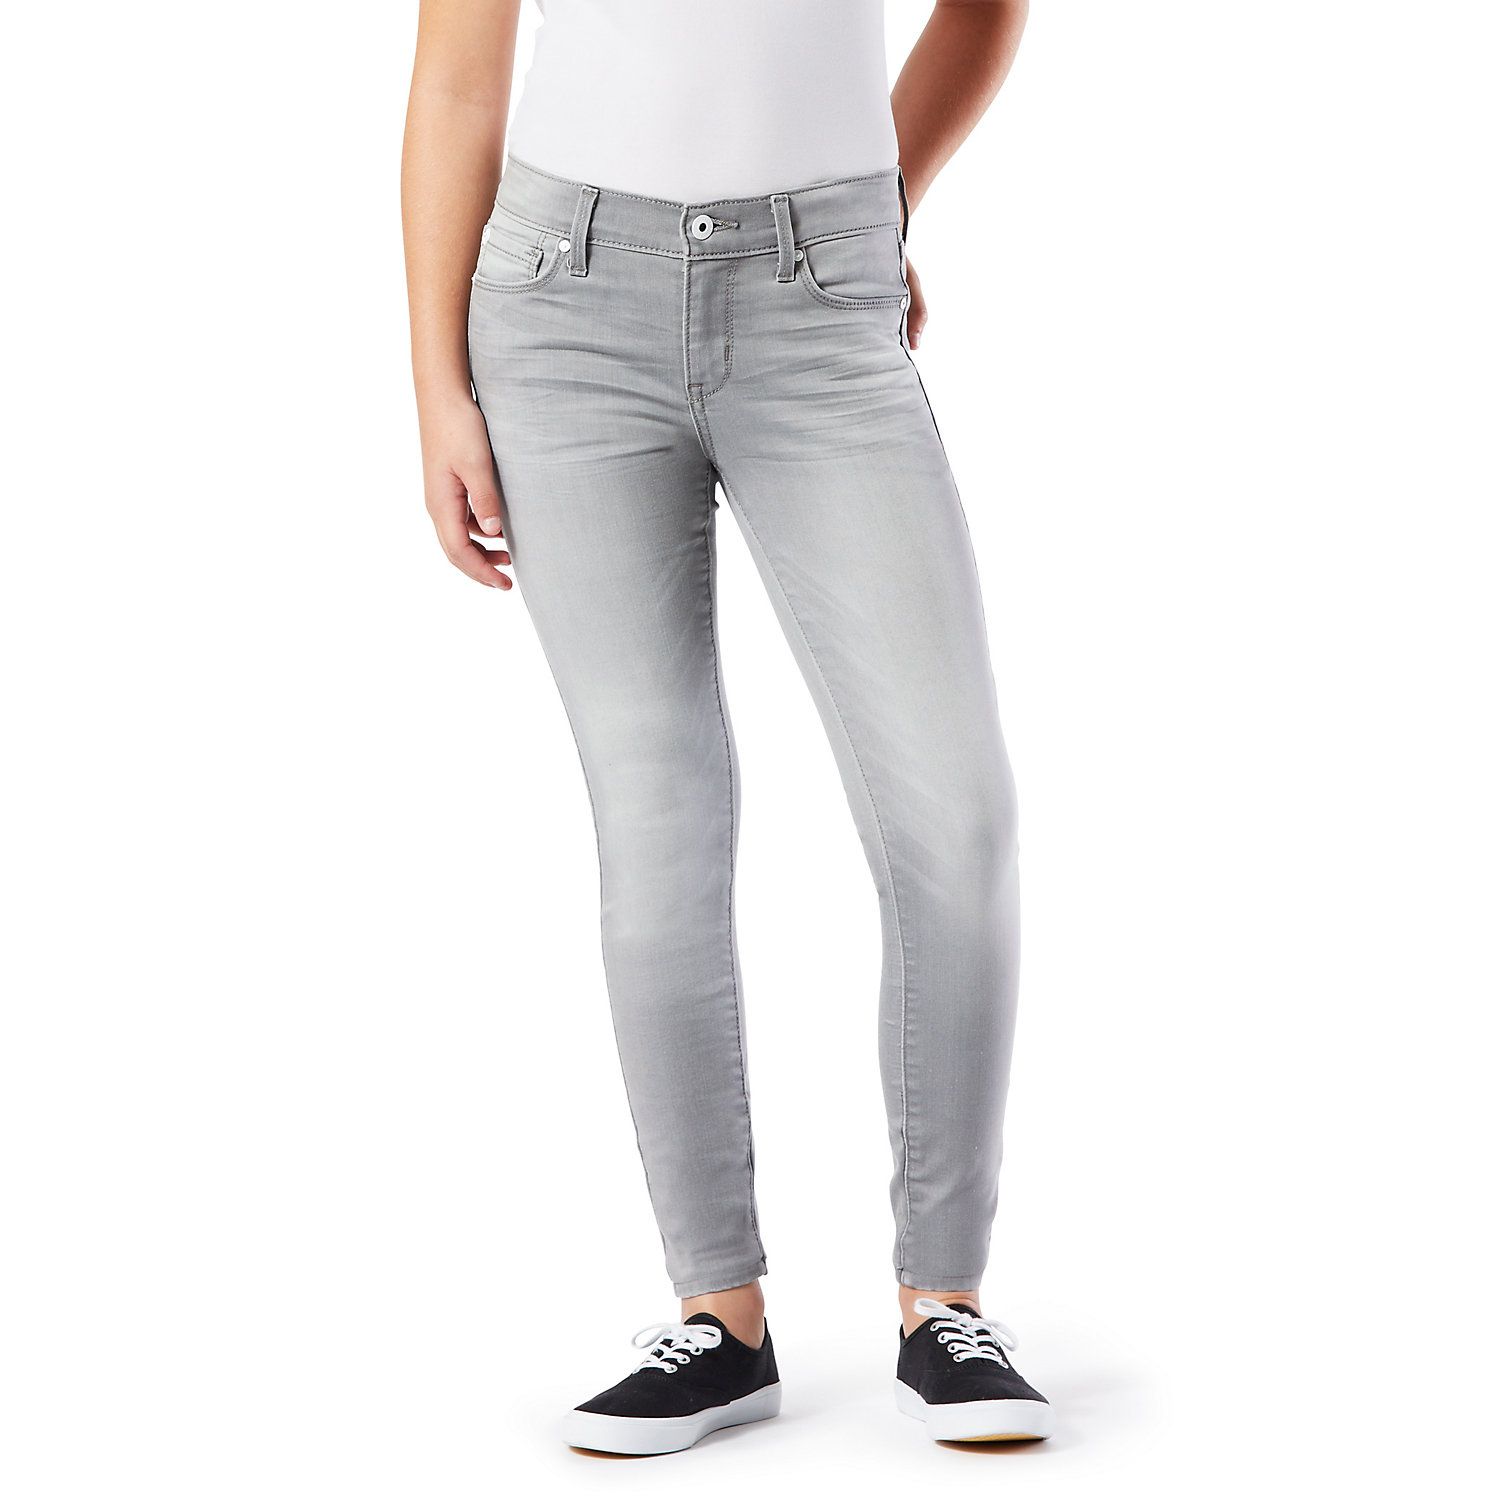 levis denizen white jeans